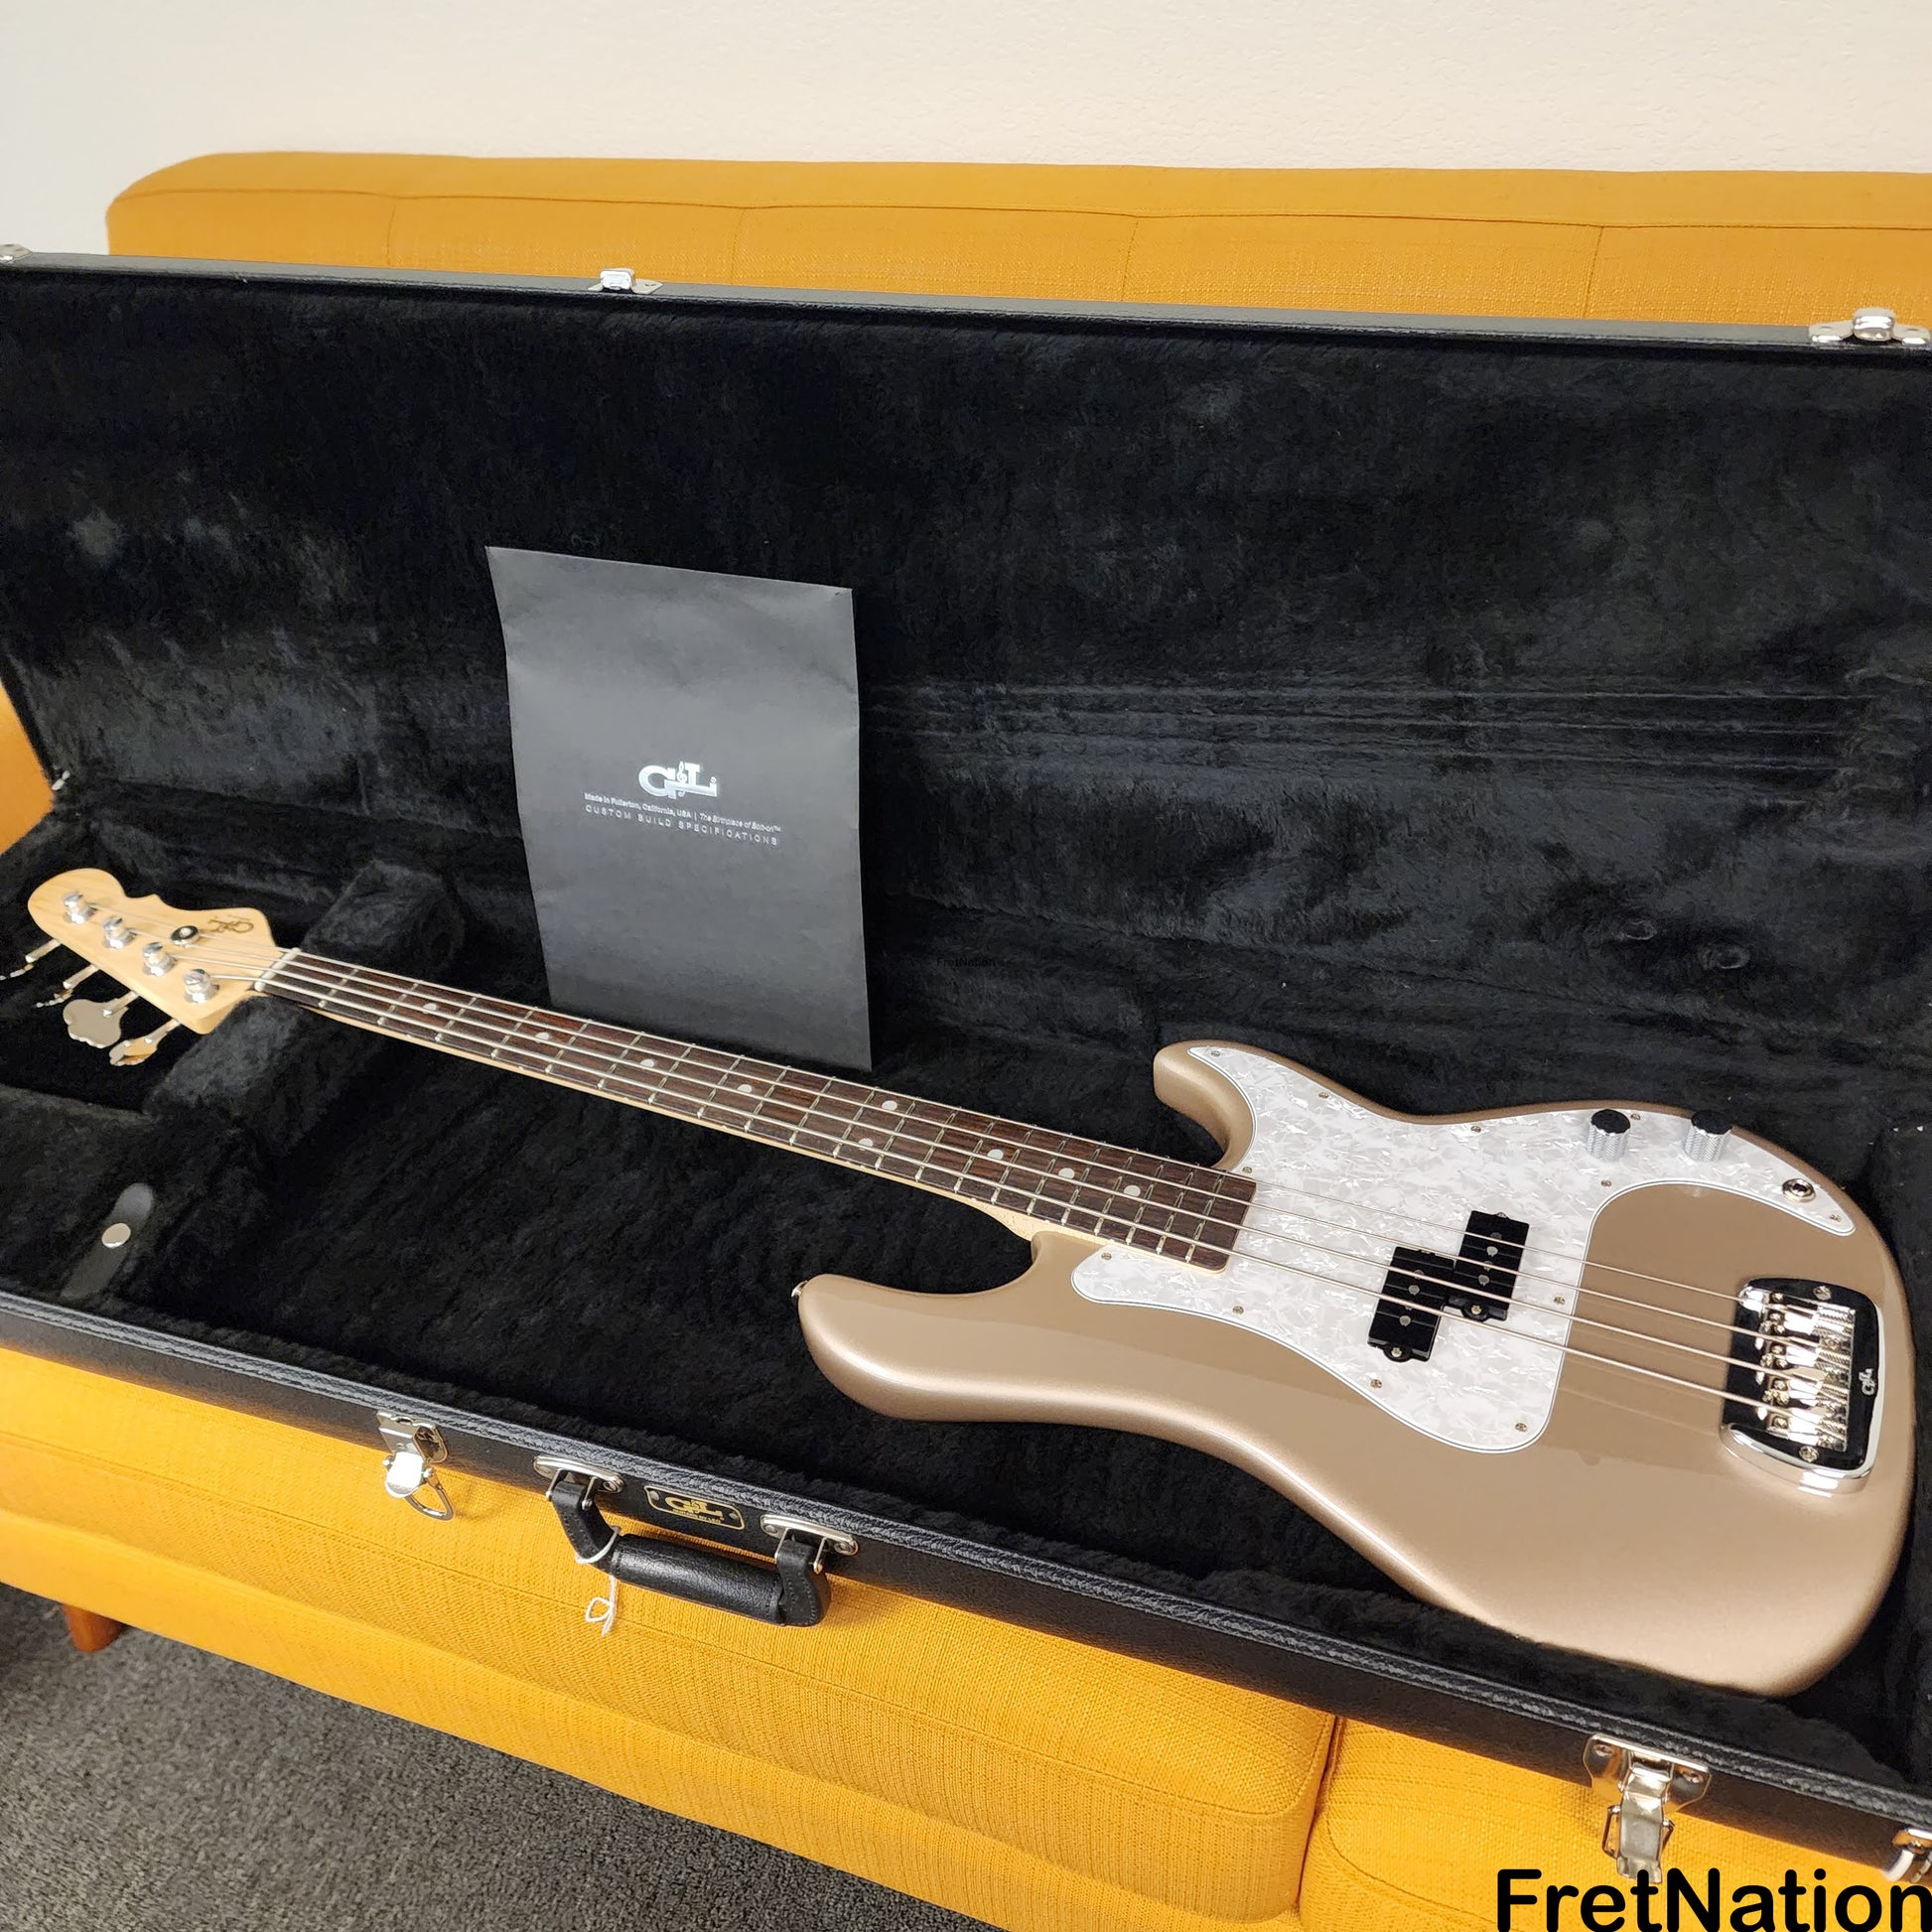 G&L G&L LB-100 Shoreline Gold 4-String Bass 9.30 Pounds CLF2207347